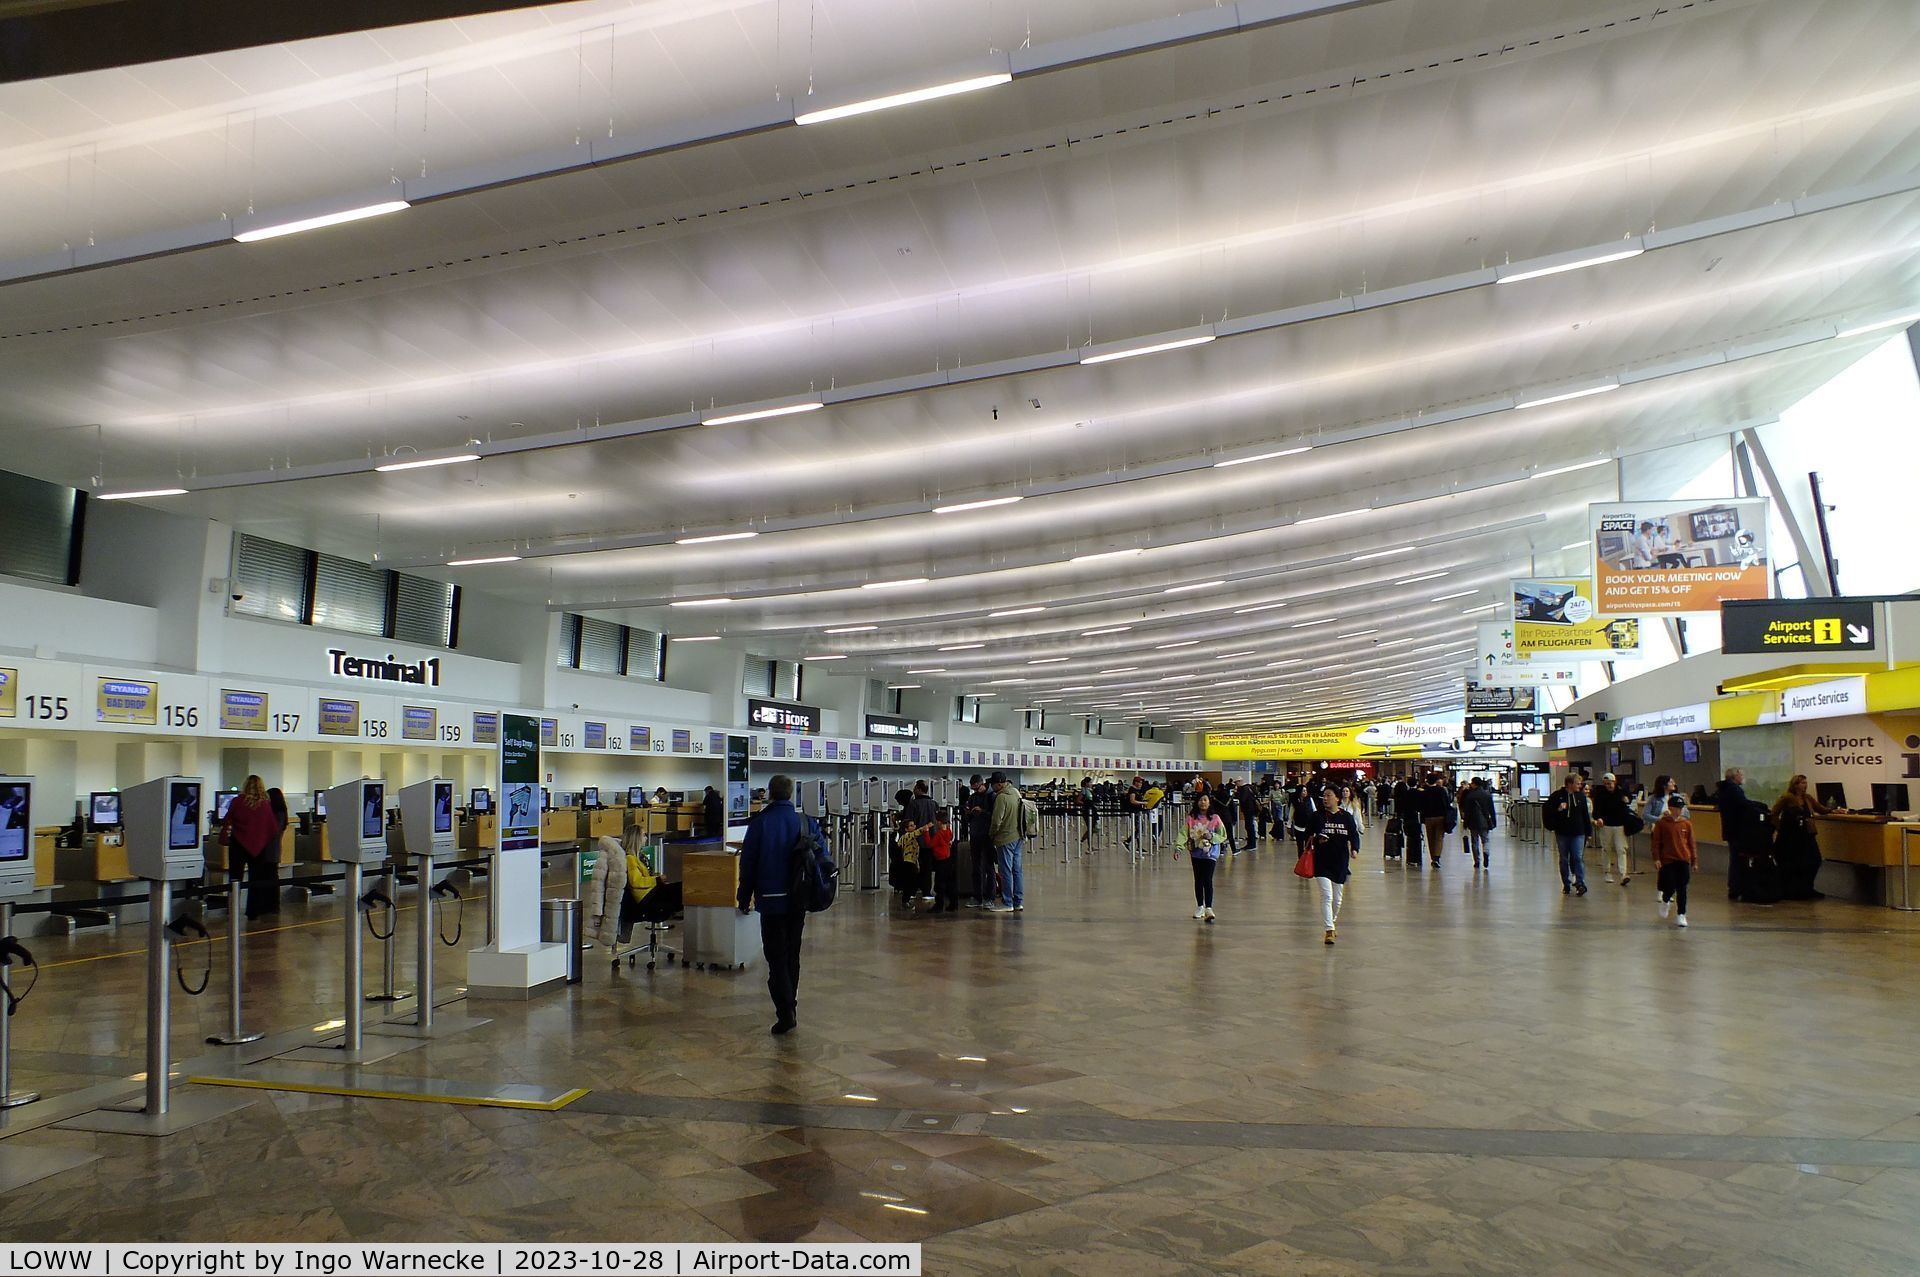 Vienna International Airport, Vienna Austria (LOWW) - inside terminal 1 (curved section) at Wien airport